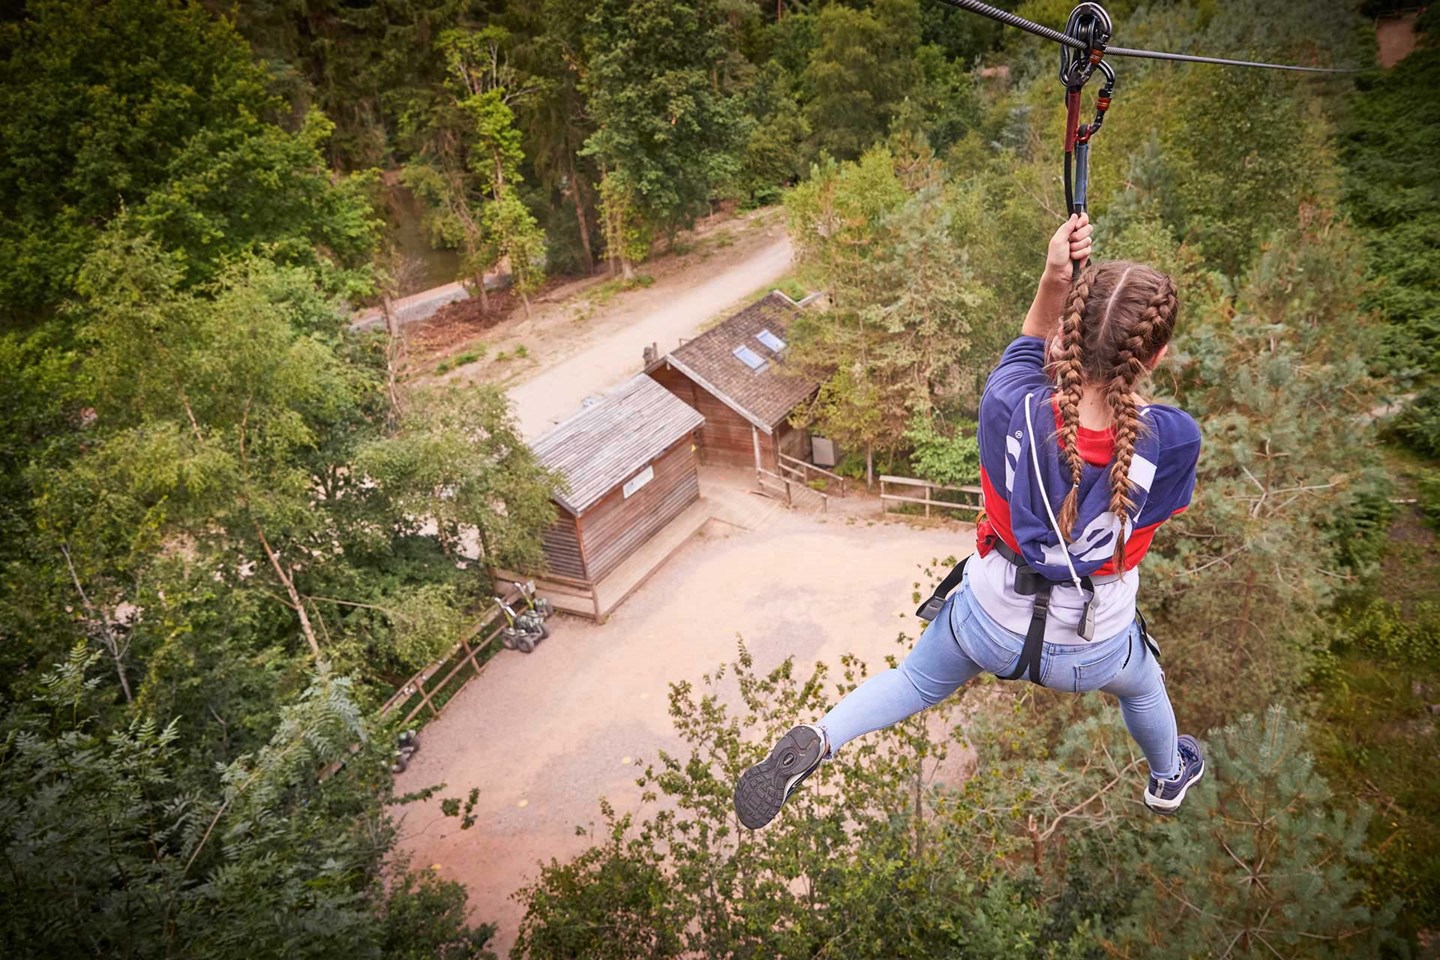 Teenage girl ziplines over trees and wooden buildings below 